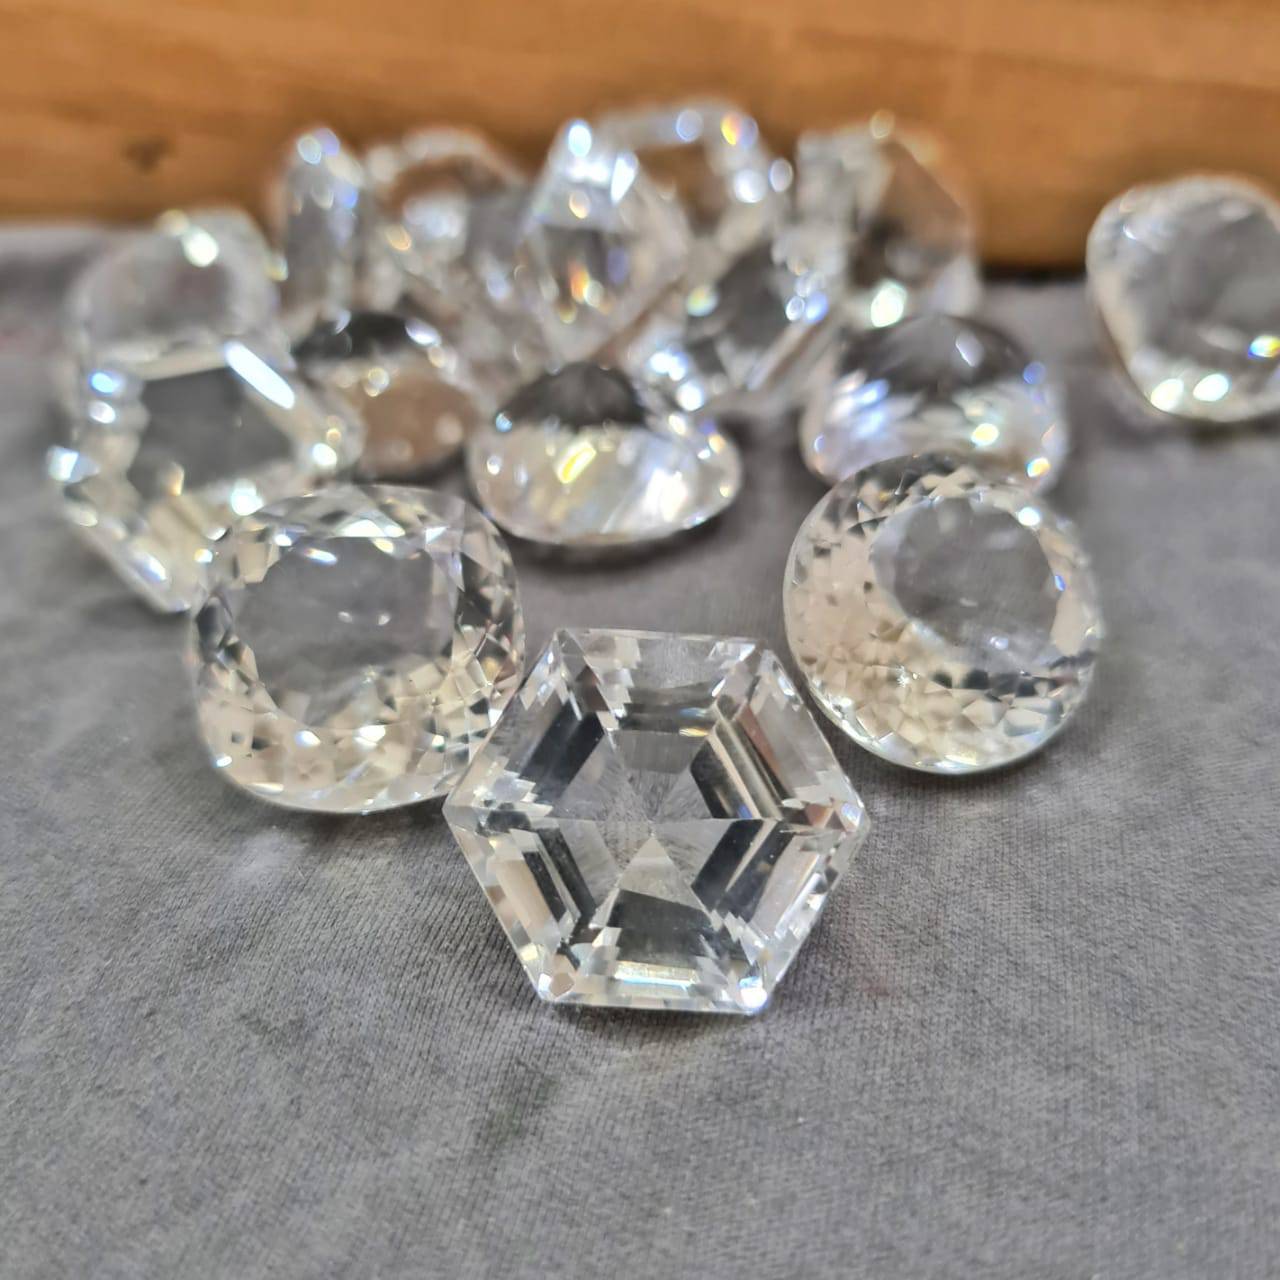 5 Pcs Clear Quartz Natural Faceted - Round| Hexagon | cushio - The LabradoriteKing